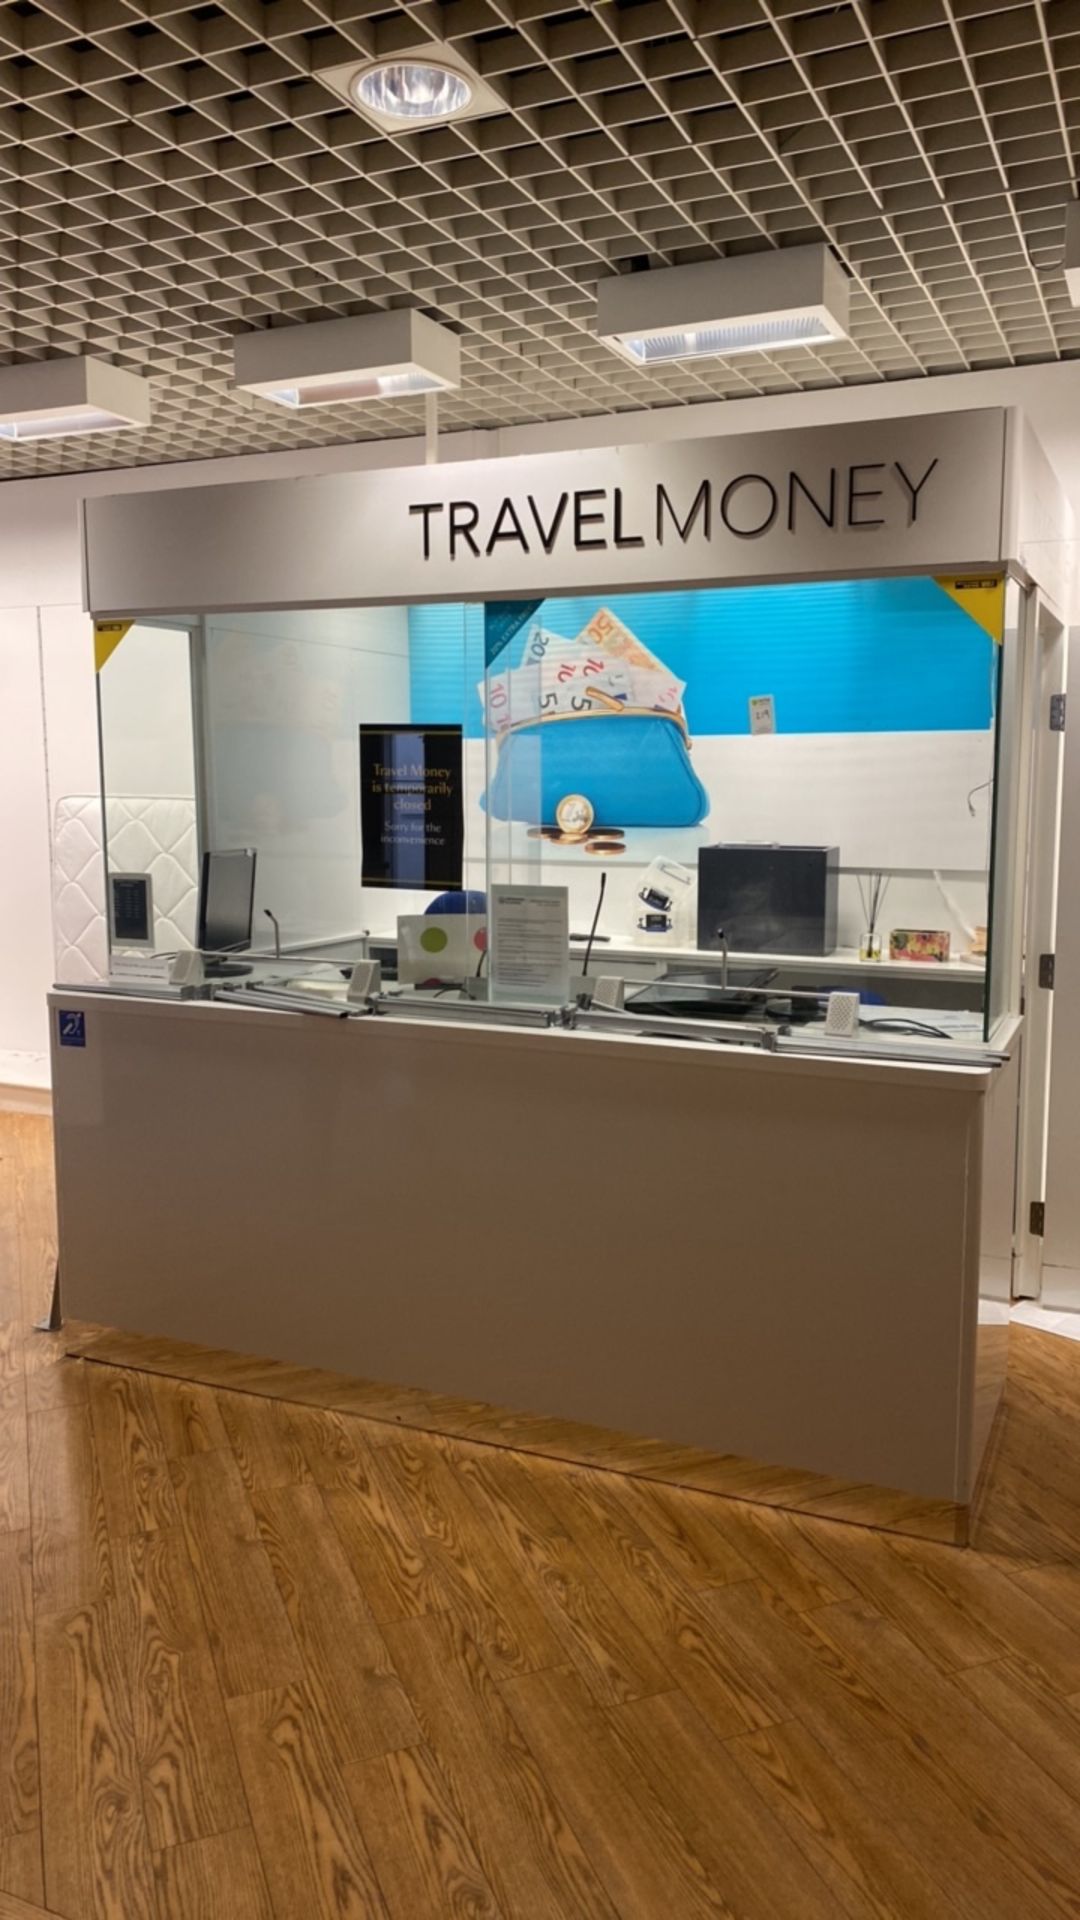 Contents of Travel Money Kiosk